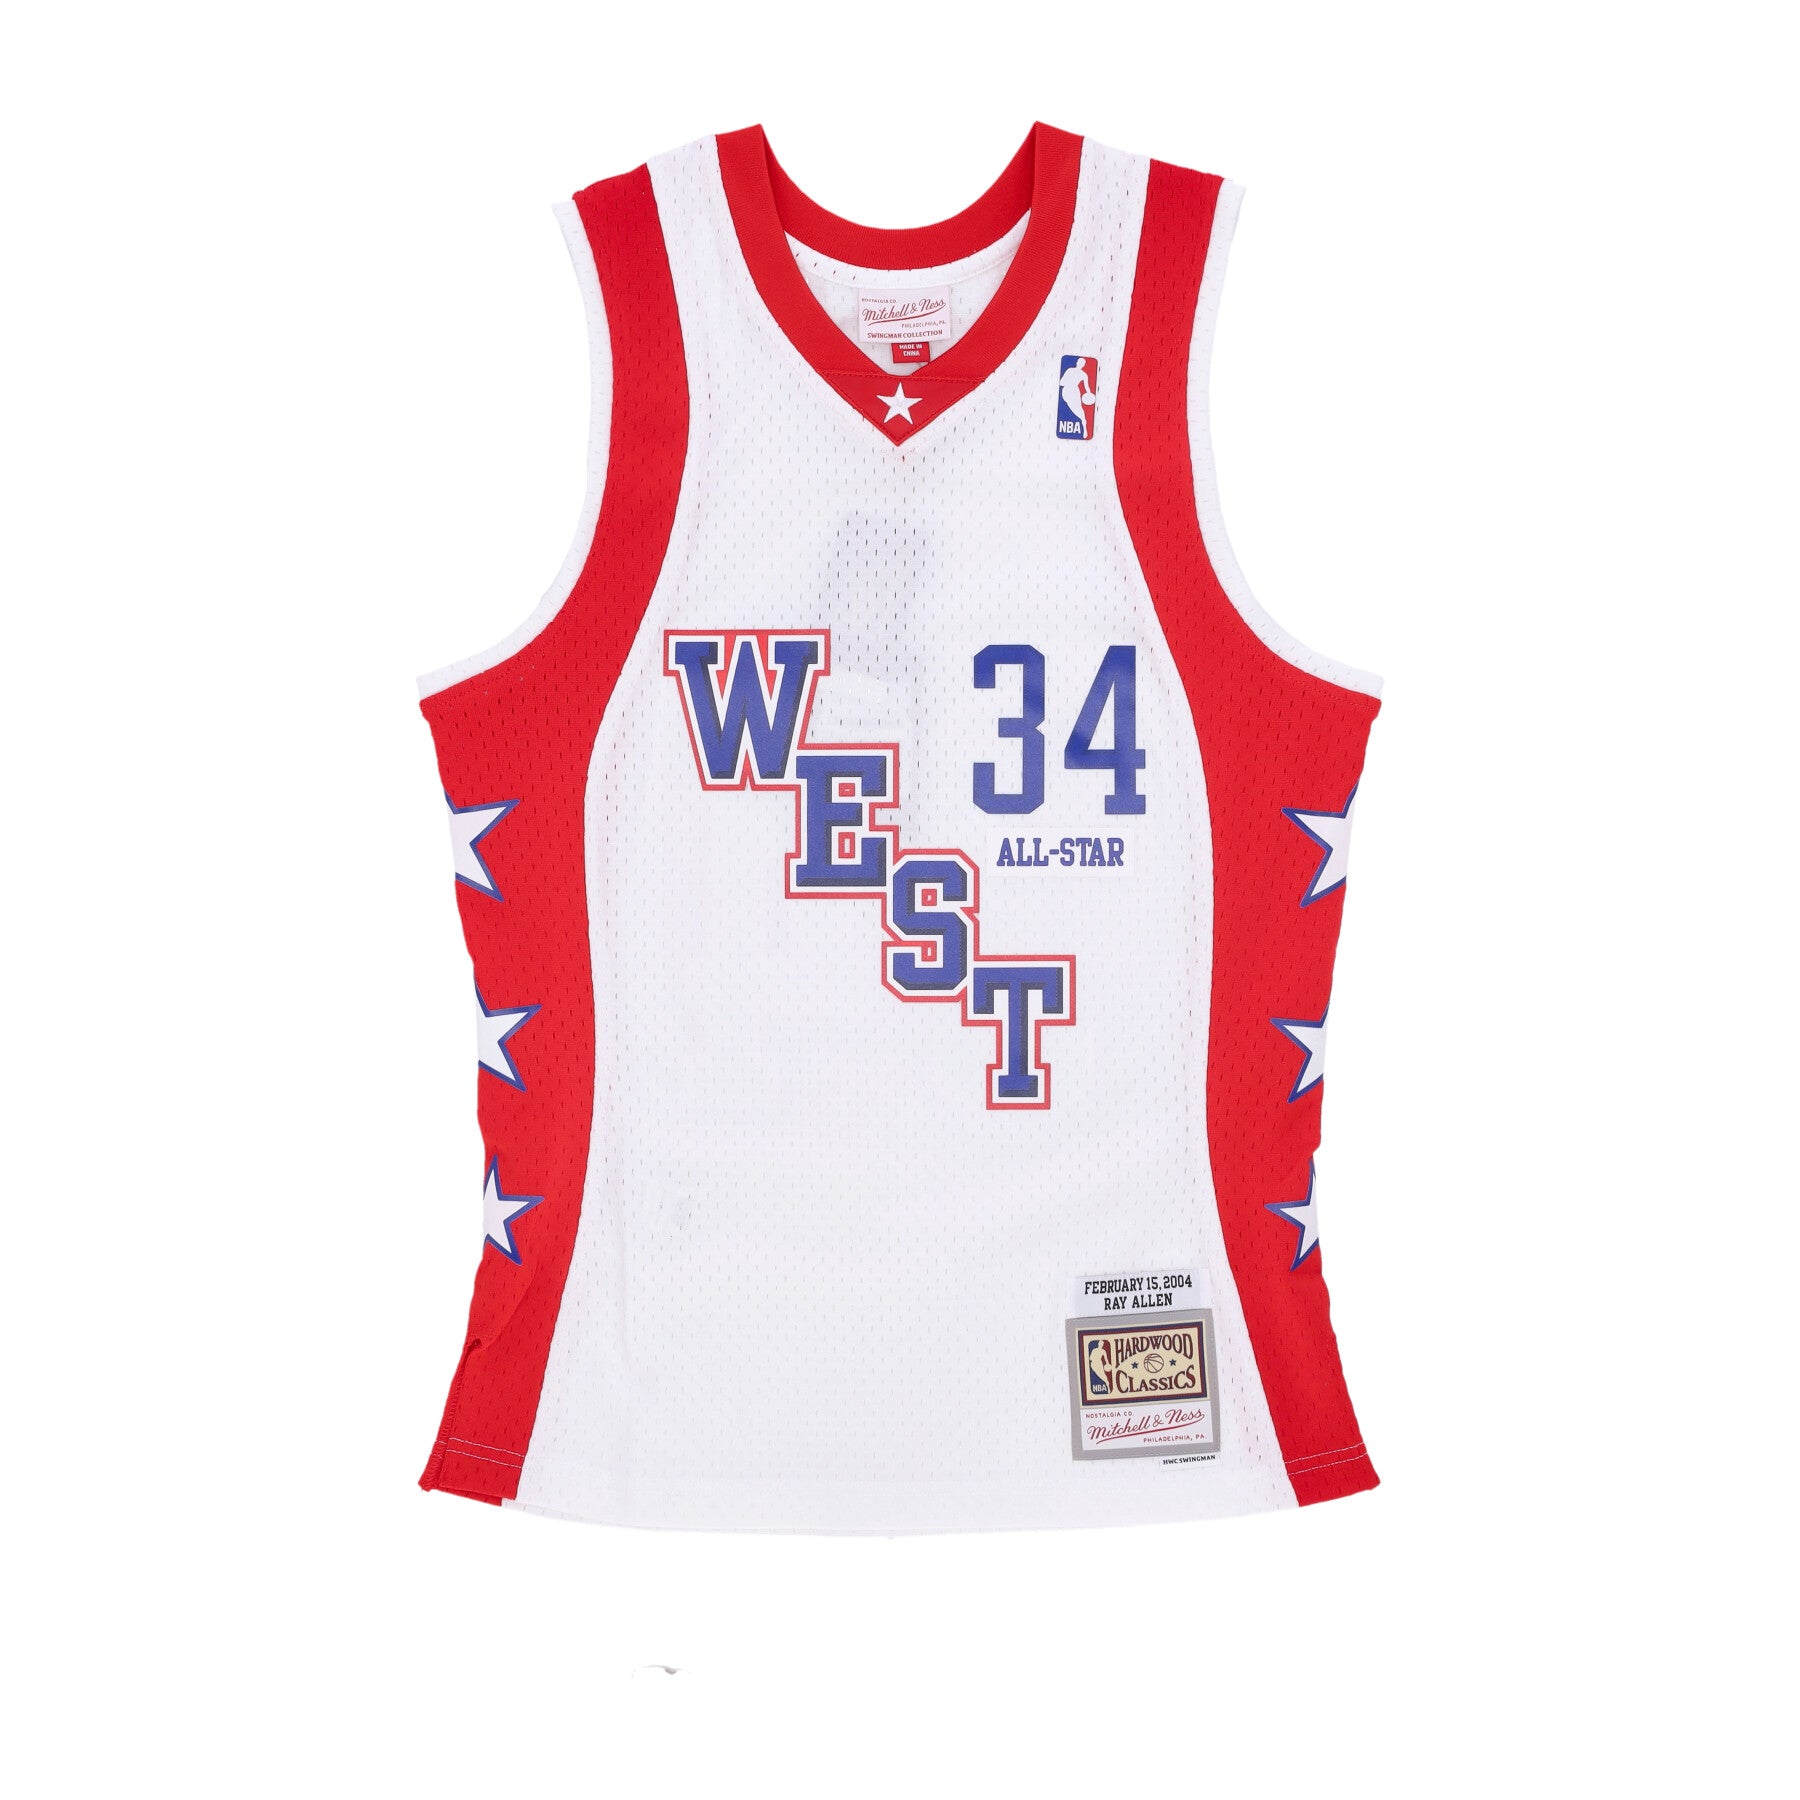 Canotta Basket Uomo Nba White Jersey All Star 2004 No 34 Ray Allen Team West White SMJY7086-ASW04RALWHIT